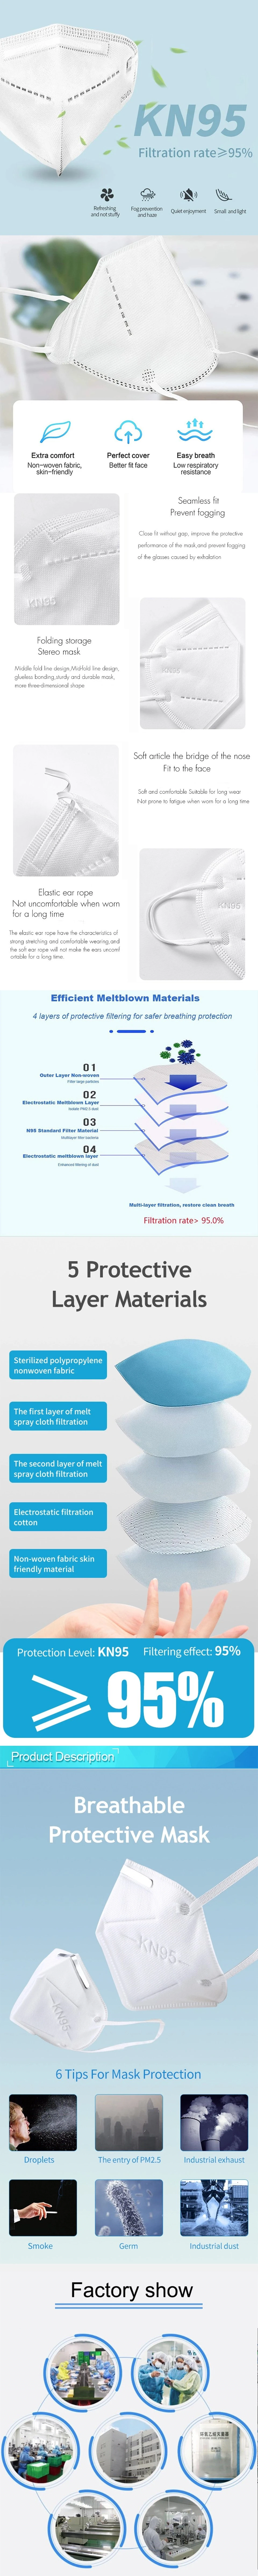 Disposable Nitrile / Vinyl Latex Examination Medical Gloves Latex Cheap Powdered Price High Sterile Powder Free Latex Surgical Grade with Surgical Kit